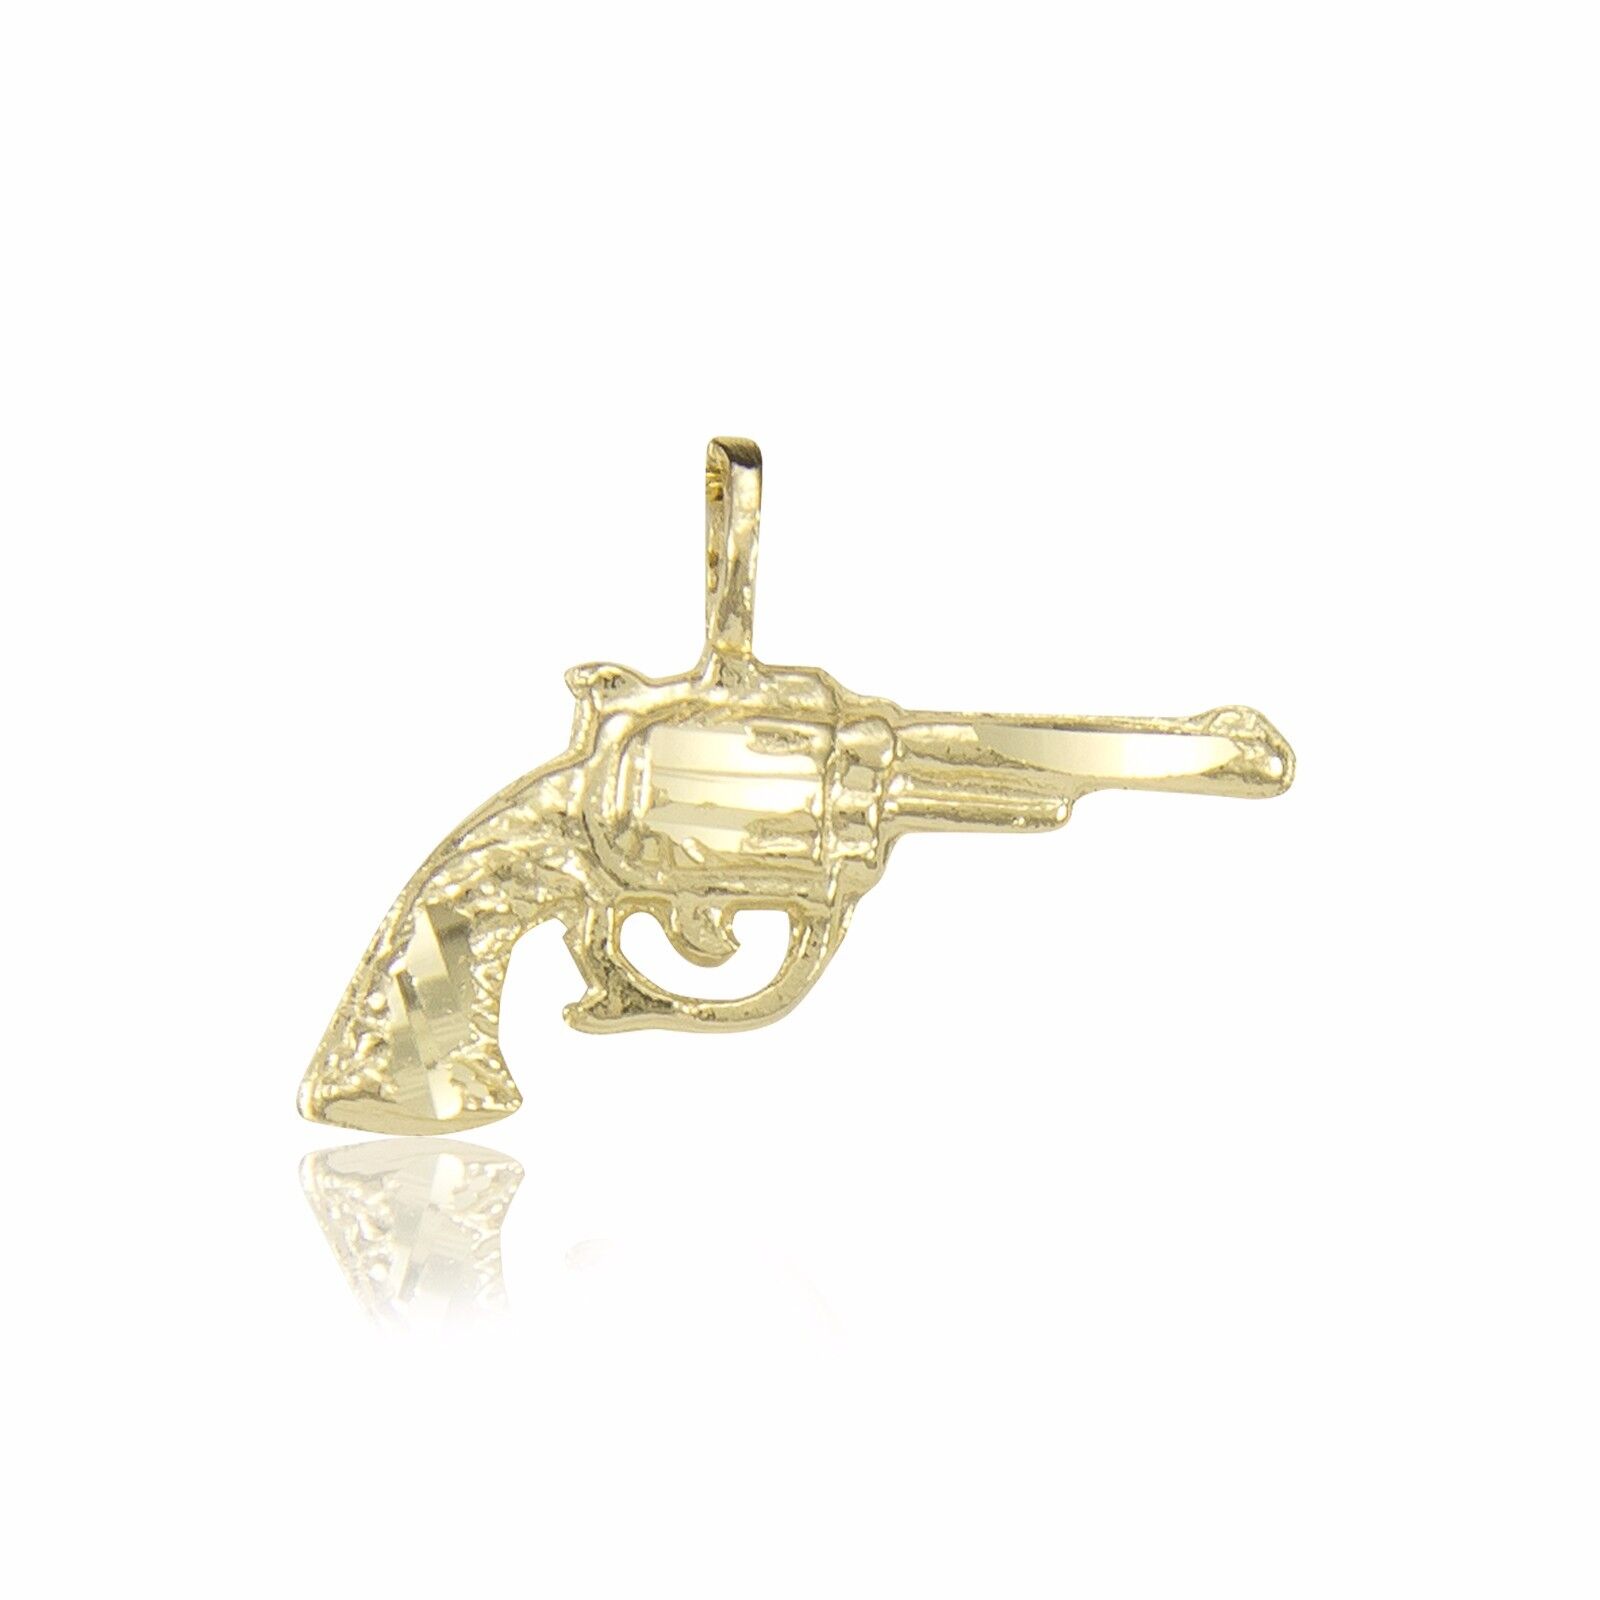 14K Solid Yellow Gold Revolver Gun Pendant - Handgun Pistol Necklace Charm Men